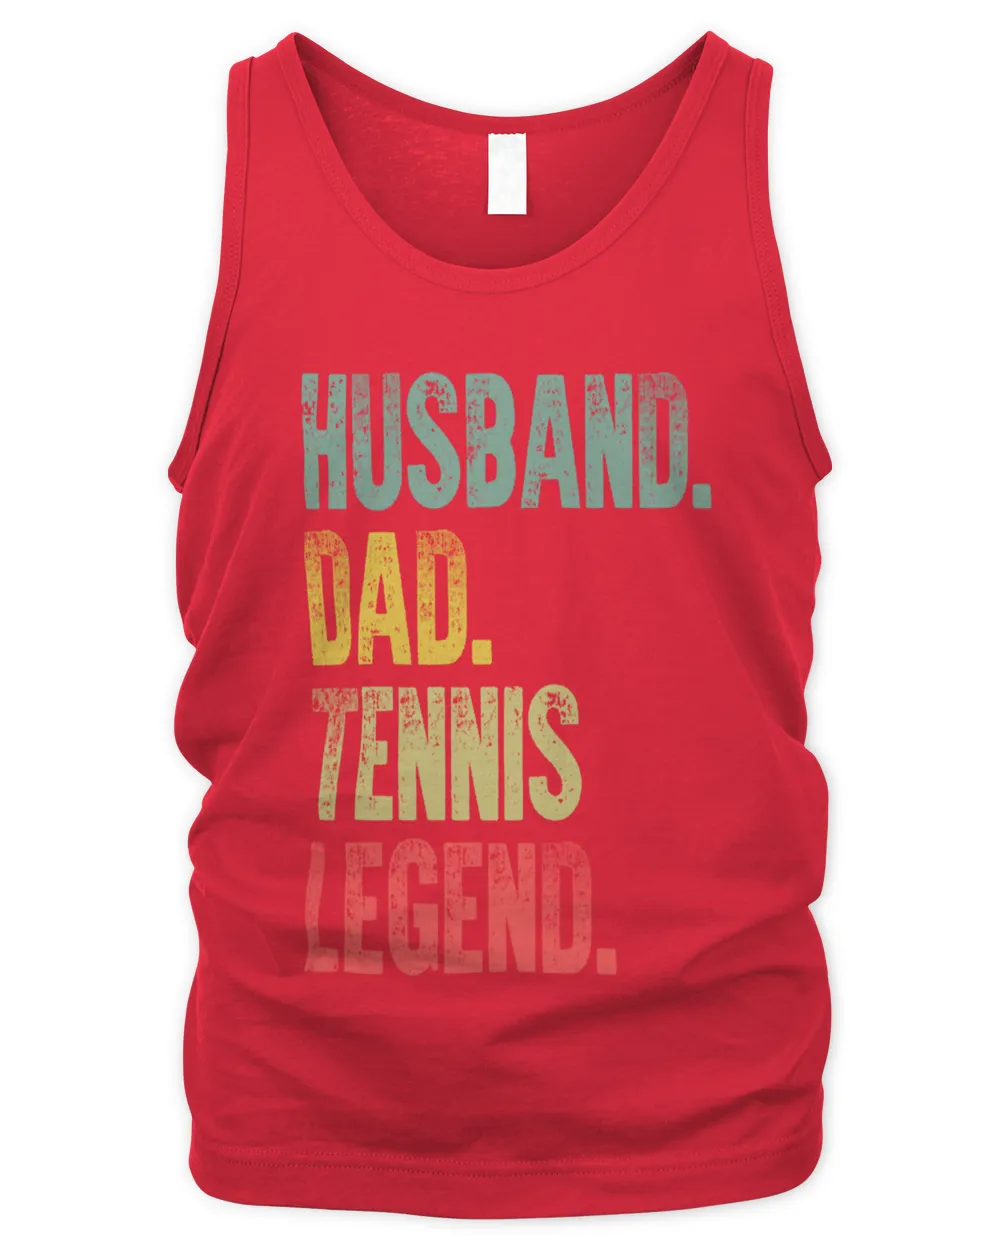 Husband dad tennis legend